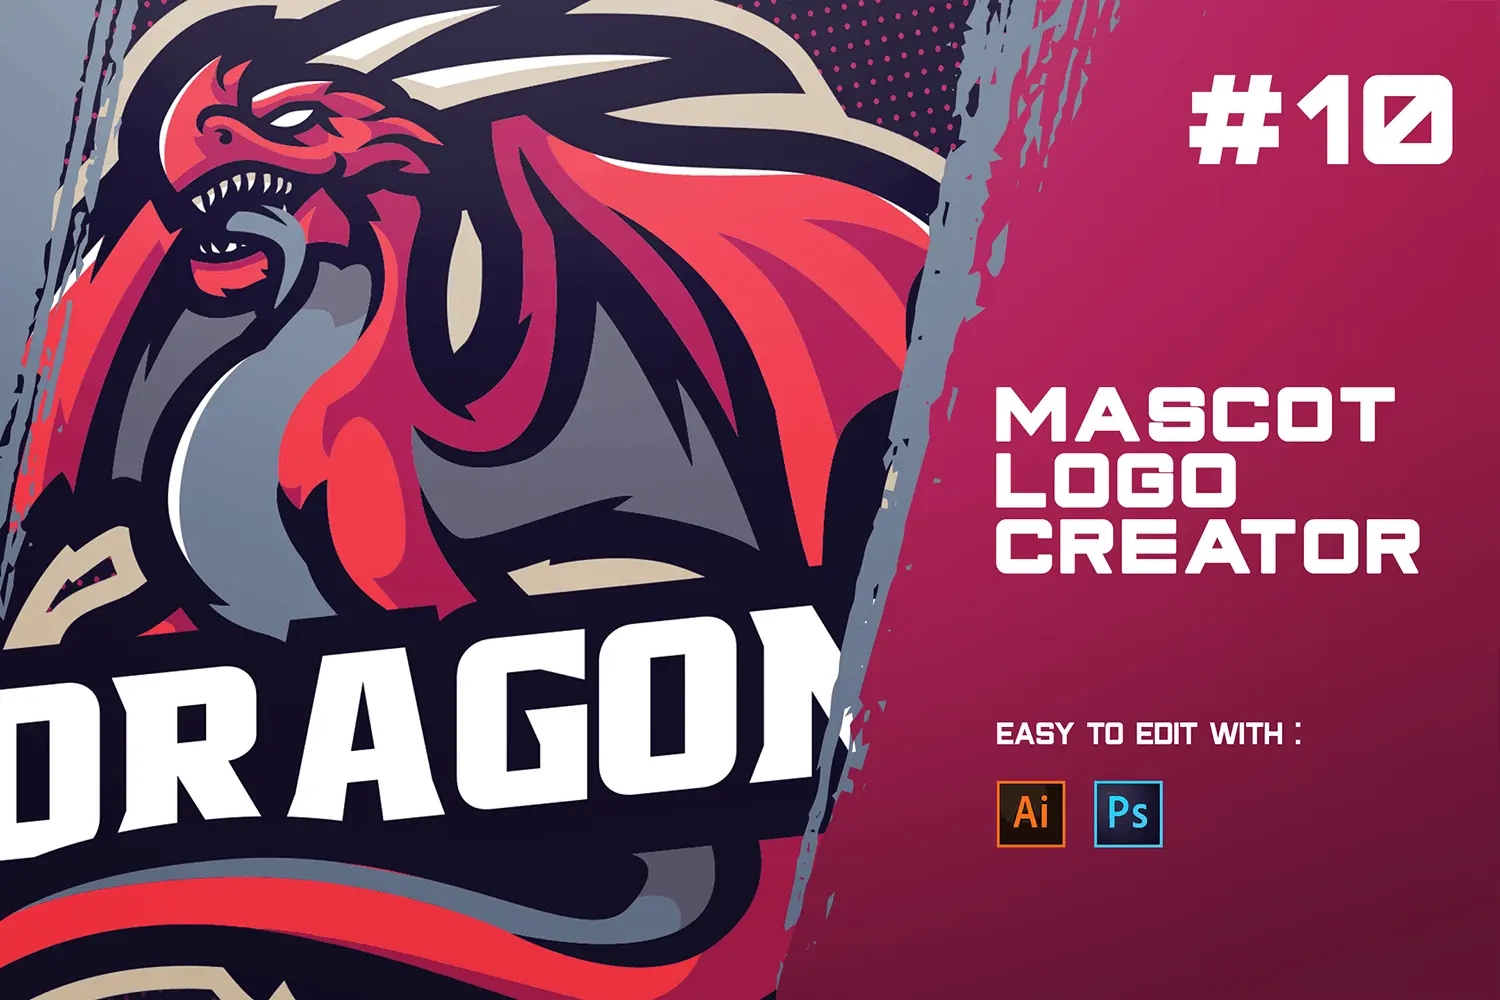 翼龙电子竞技Logo设计模板 DRAGON – E-Sports Logo Creator